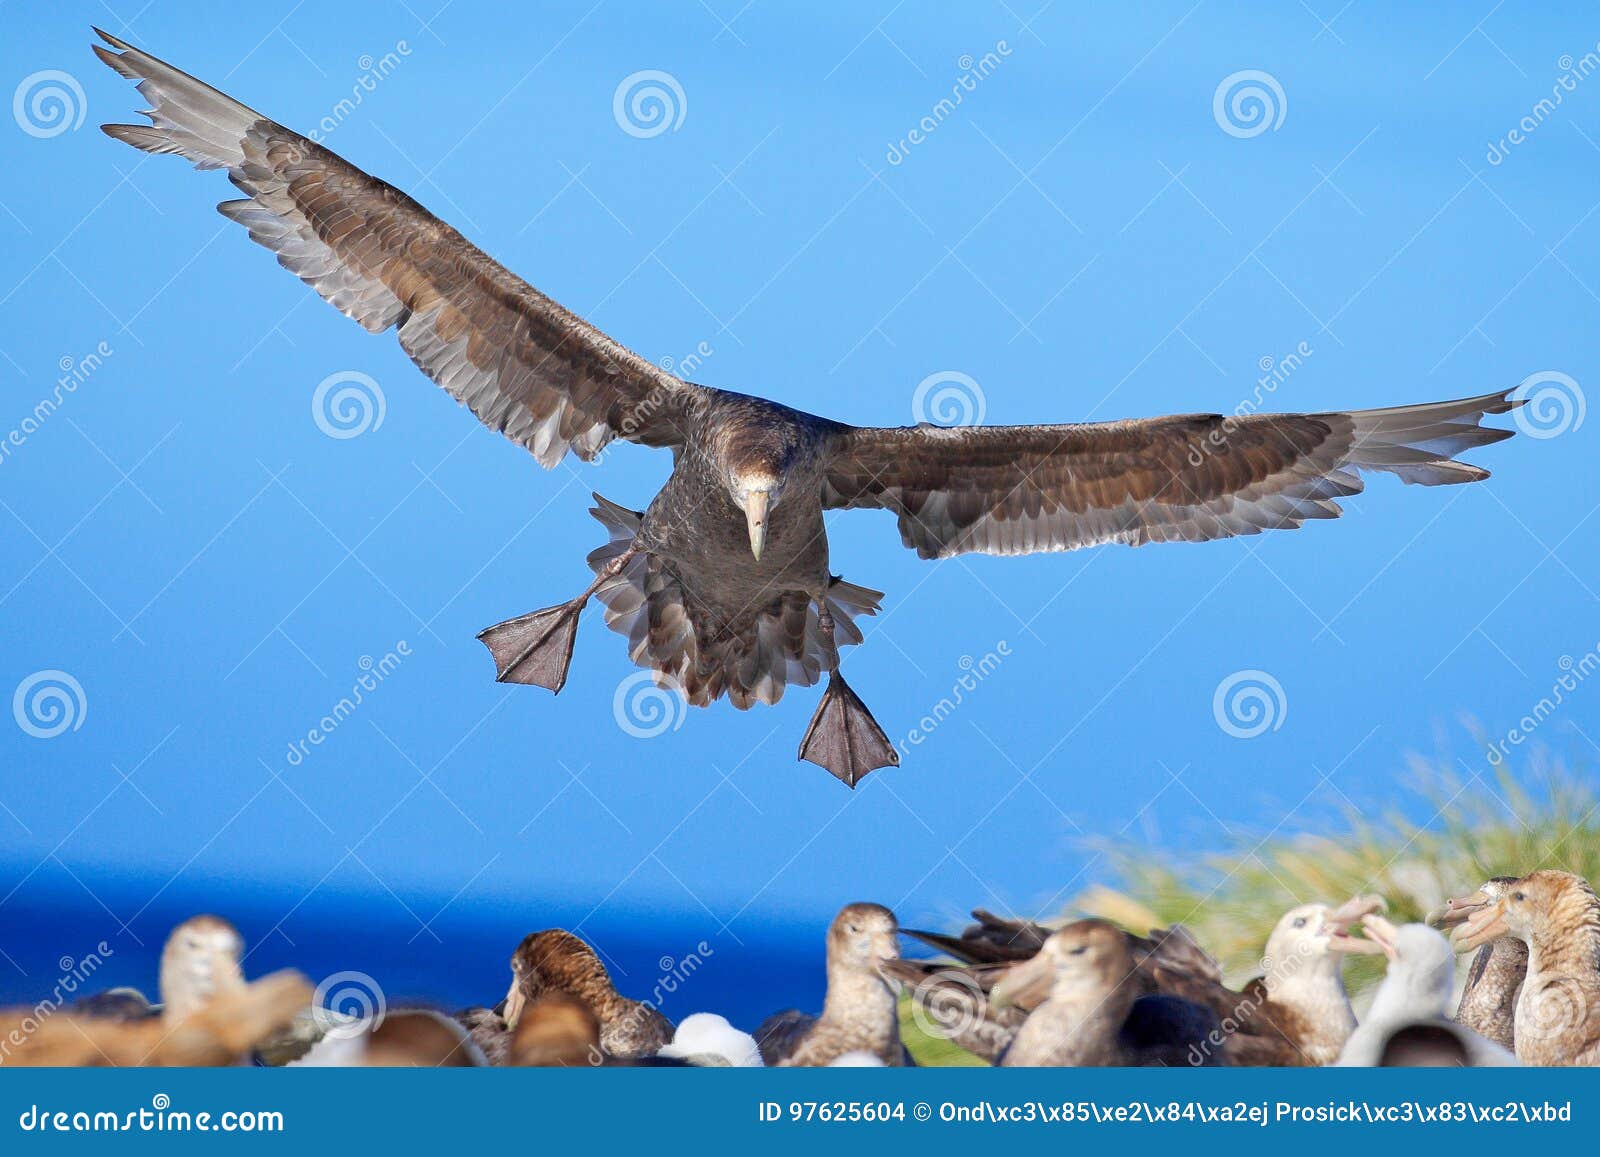 petrel in flight. giant petrel, big sea bird on the sky. bird in the nature habitat. sea animal from sea lion island, falkland isl